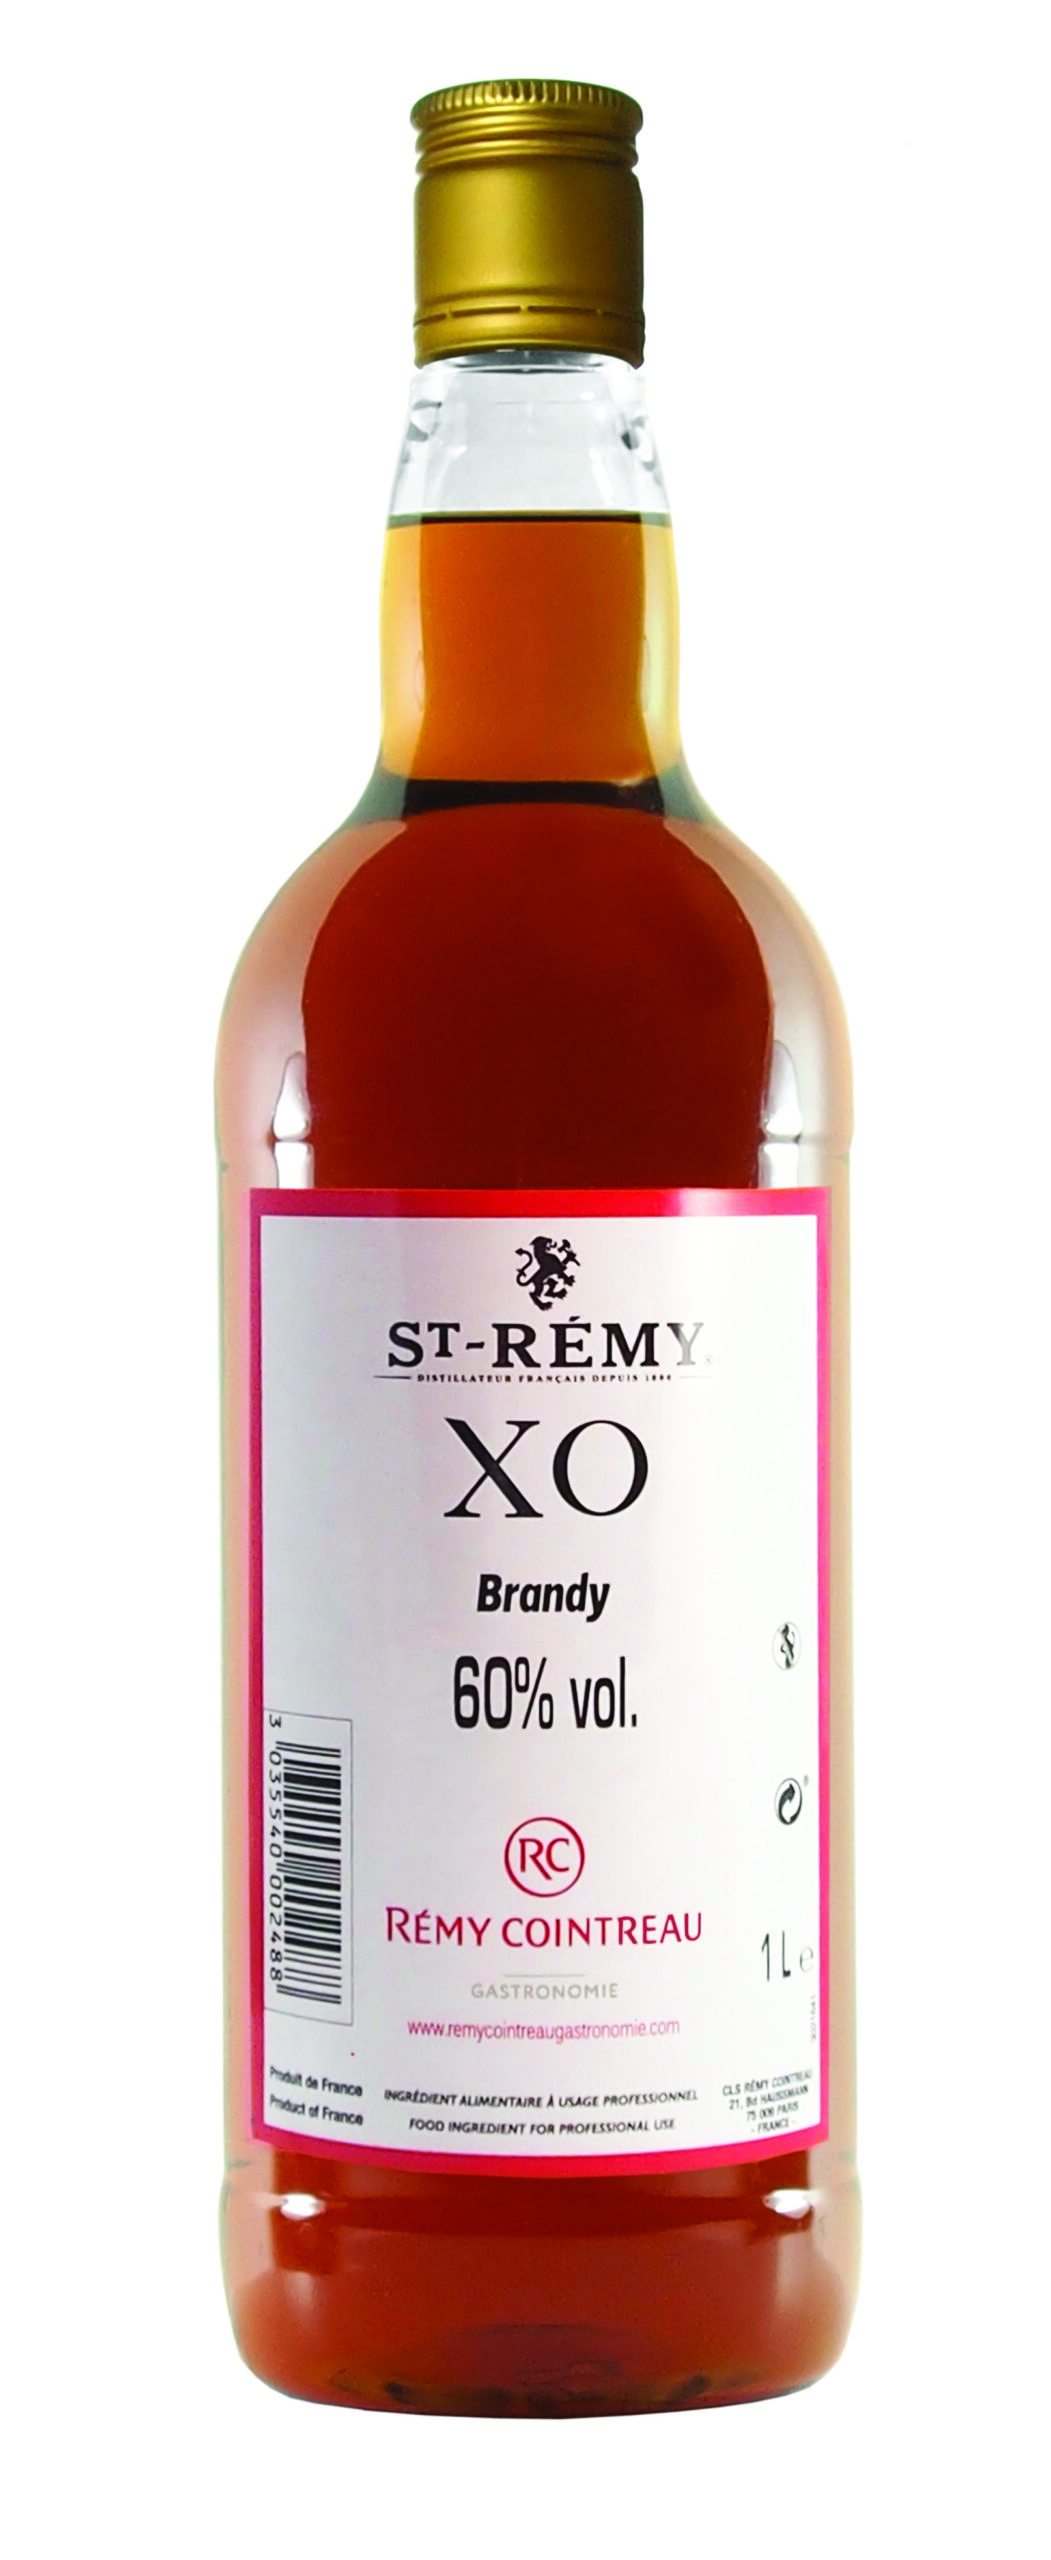 St Remy brandy culinary alcohol